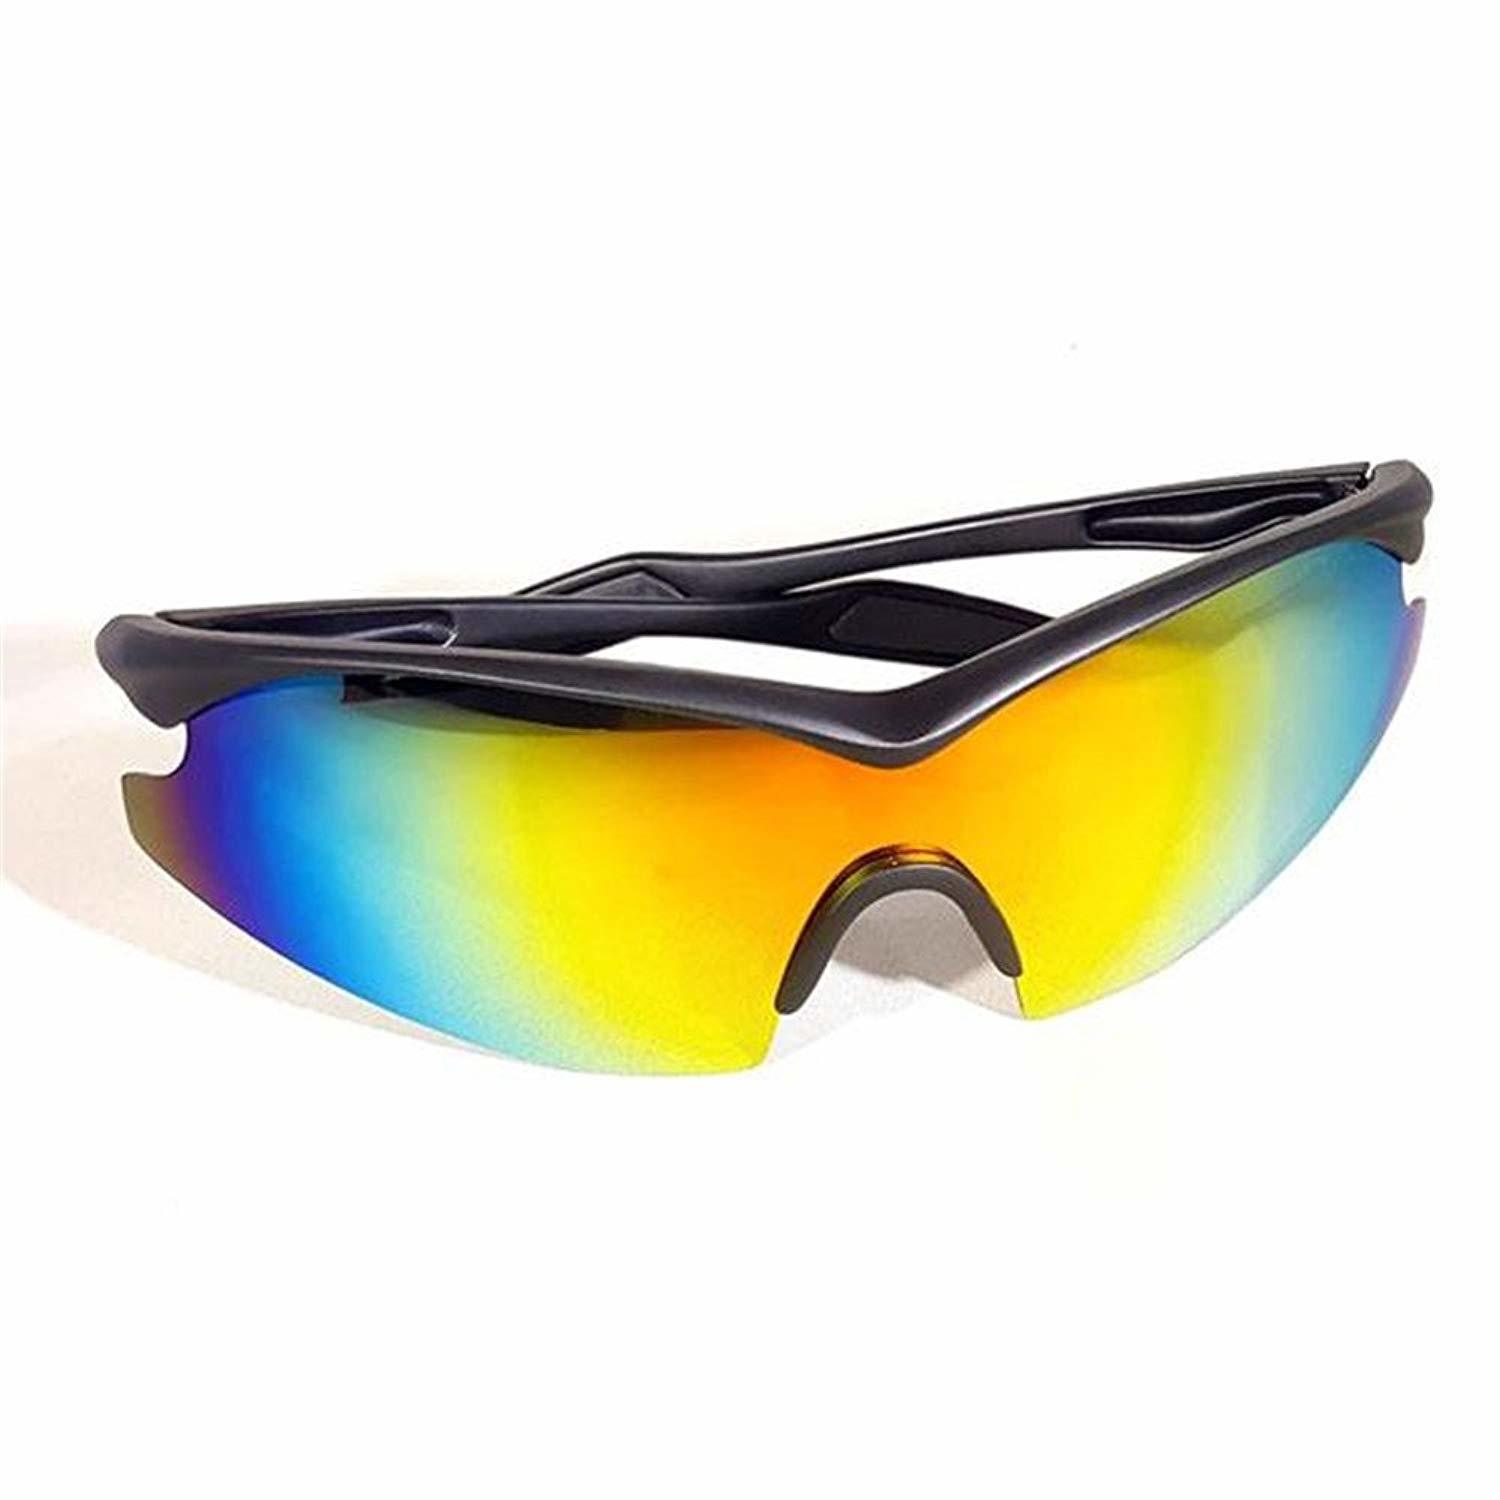 Polarized Sports Sunglasses Sport Glasses Battle Vision Hd Sunglasses For Riding Sunglasses